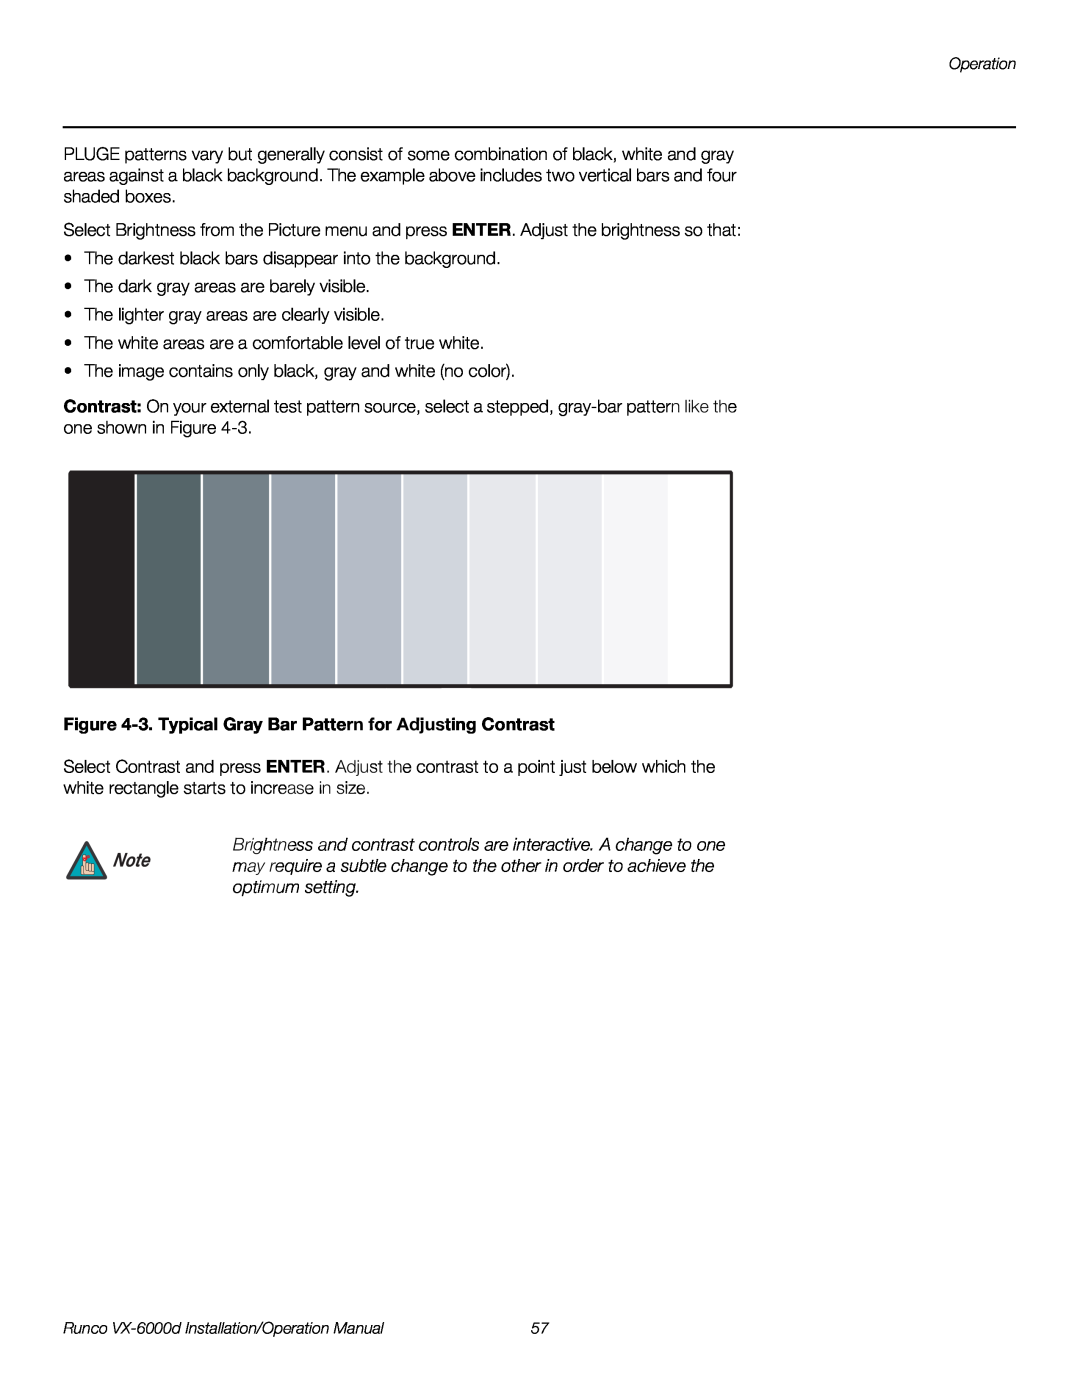 Runco VX-6000D operation manual 3. Typical Gray Bar Pattern for Adjusting Contrast 